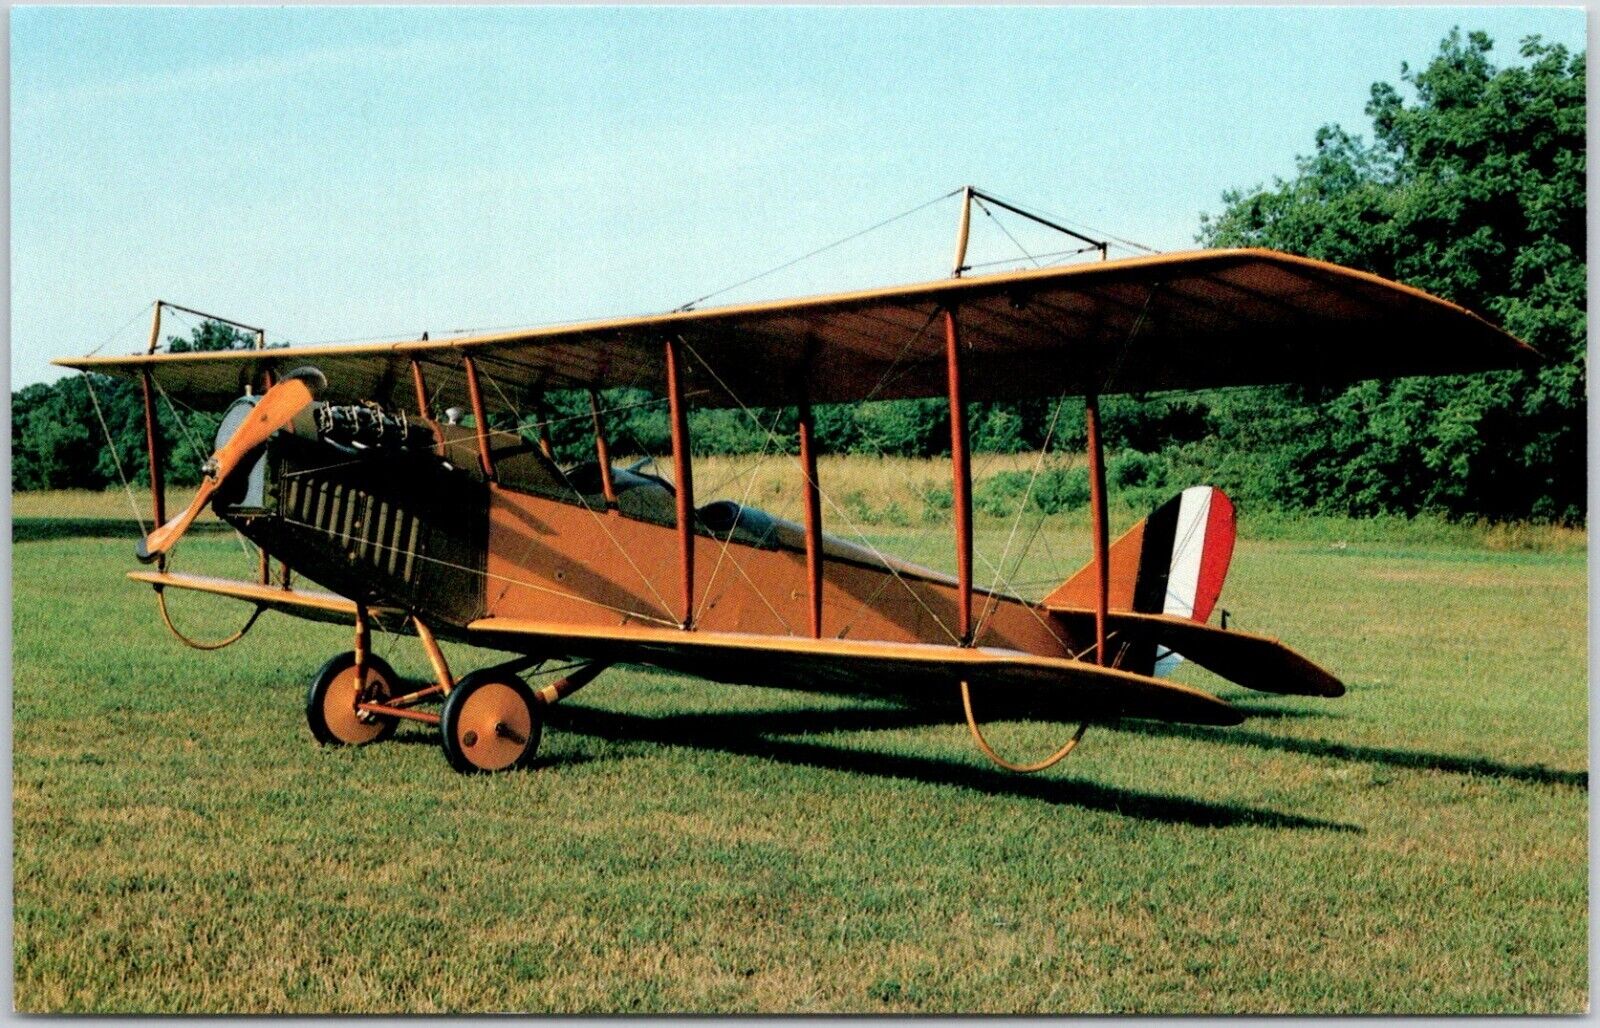 Curtis JN4-D Jenny 1918 Plane US Army Signal Corp Postcard